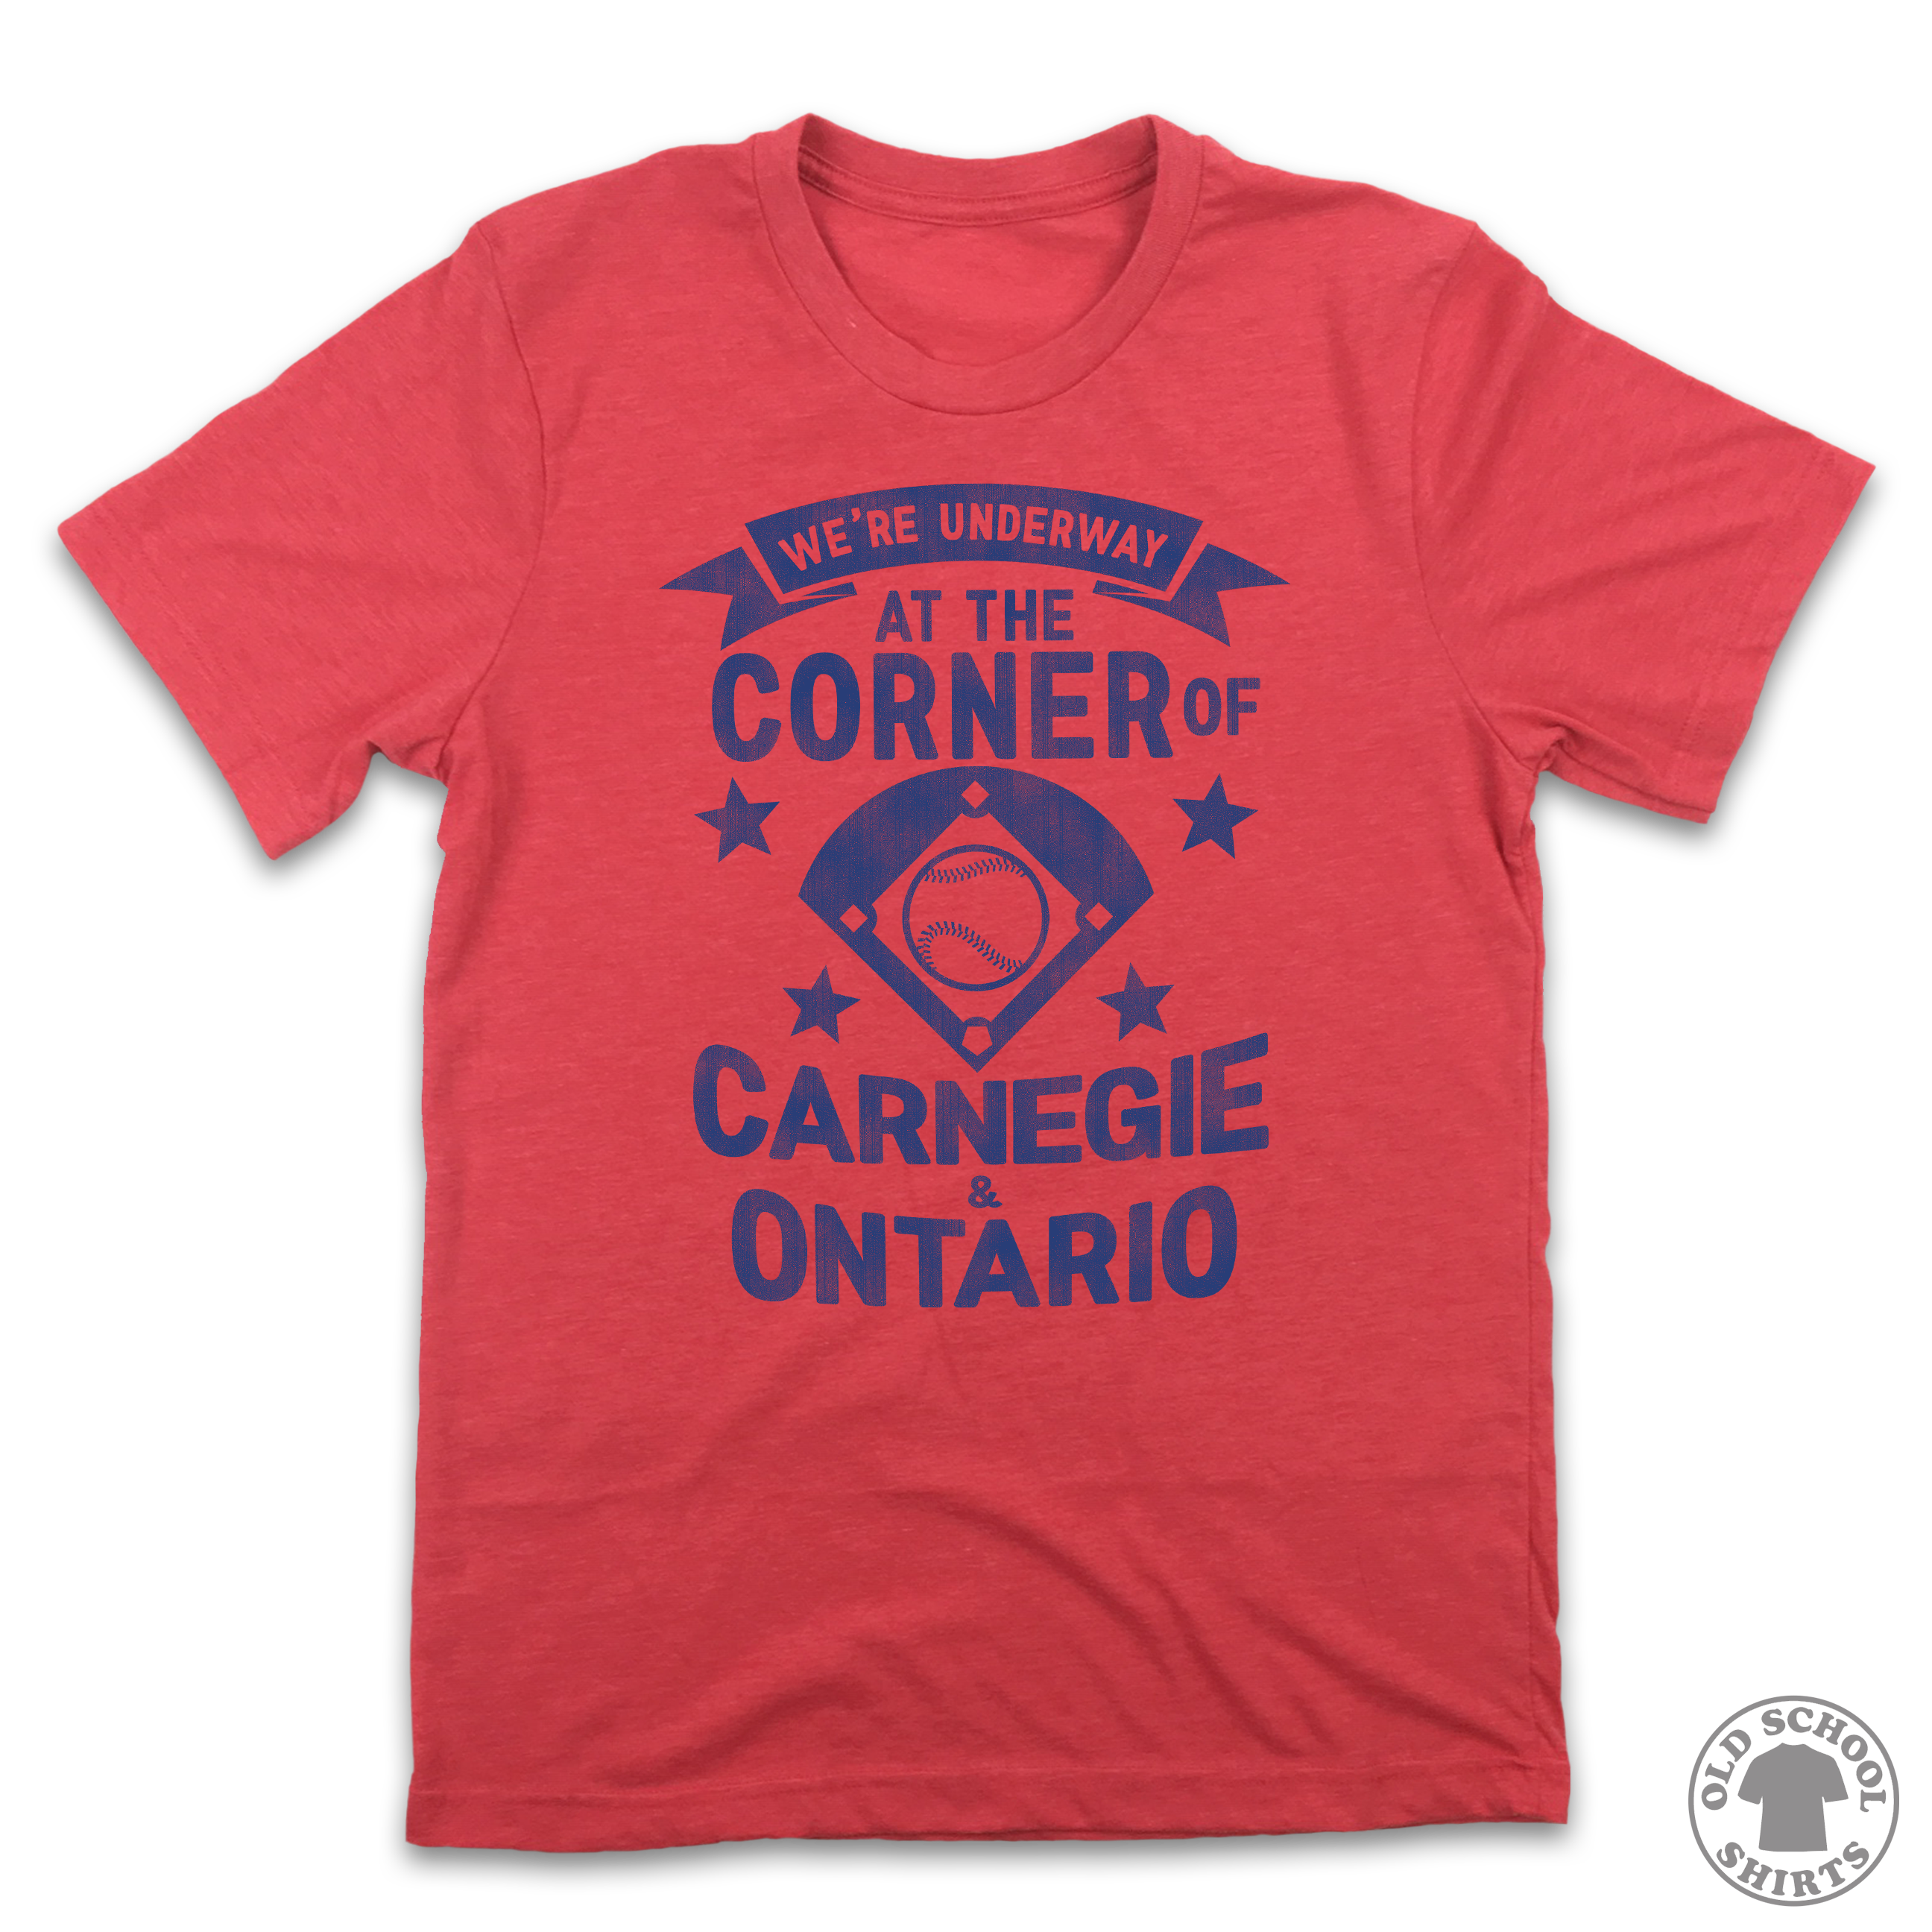 The Corner of Carnegie & Ontario